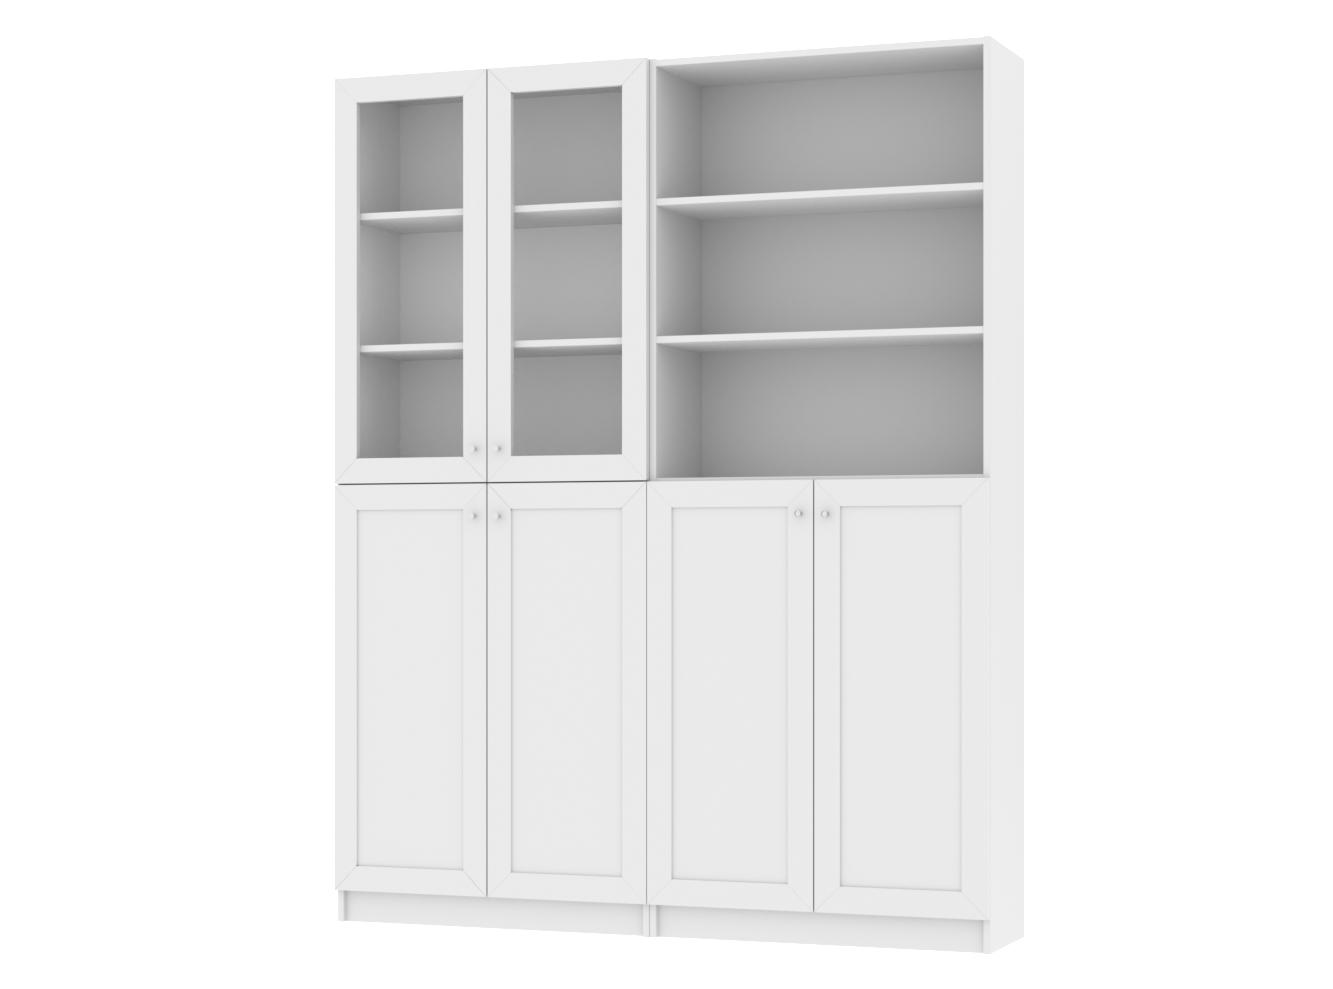  Книжный шкаф Билли 349 white ИКЕА (IKEA) изображение товара